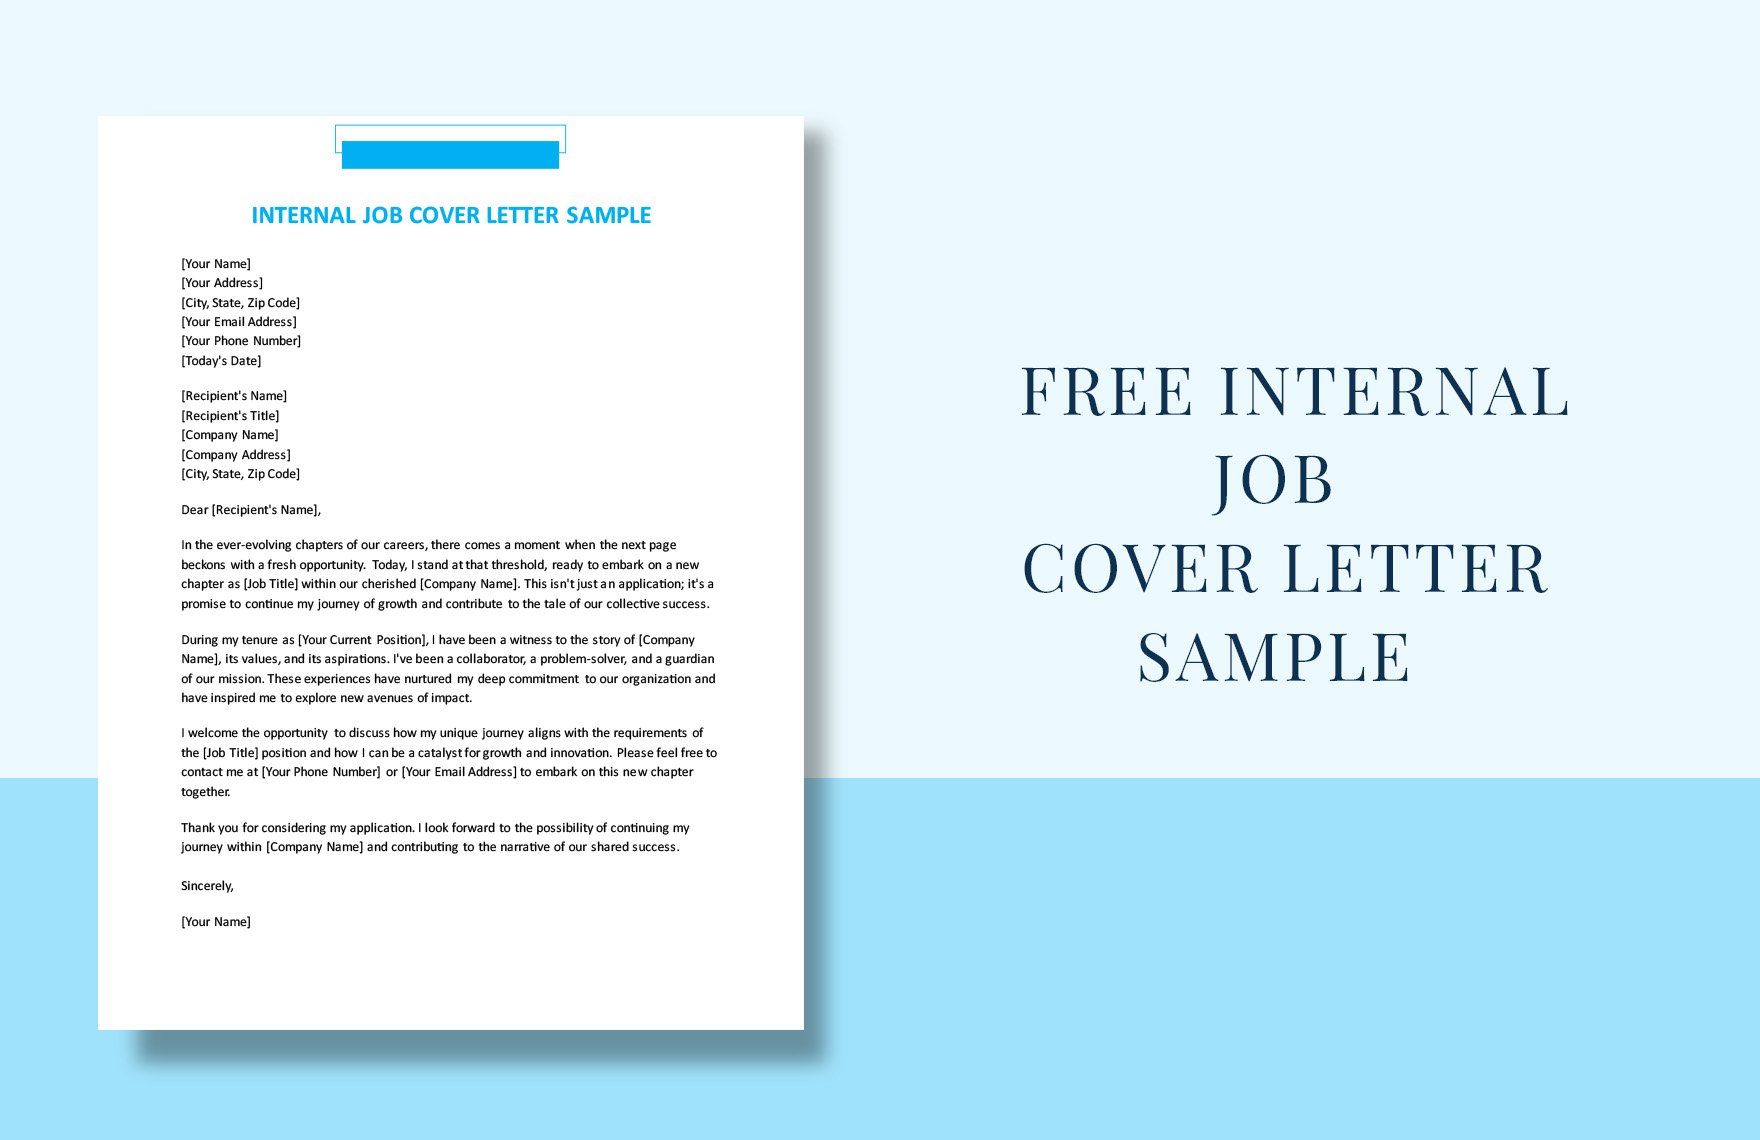 Internal Job Cover Letter Sample in Word, Google Docs, PDF